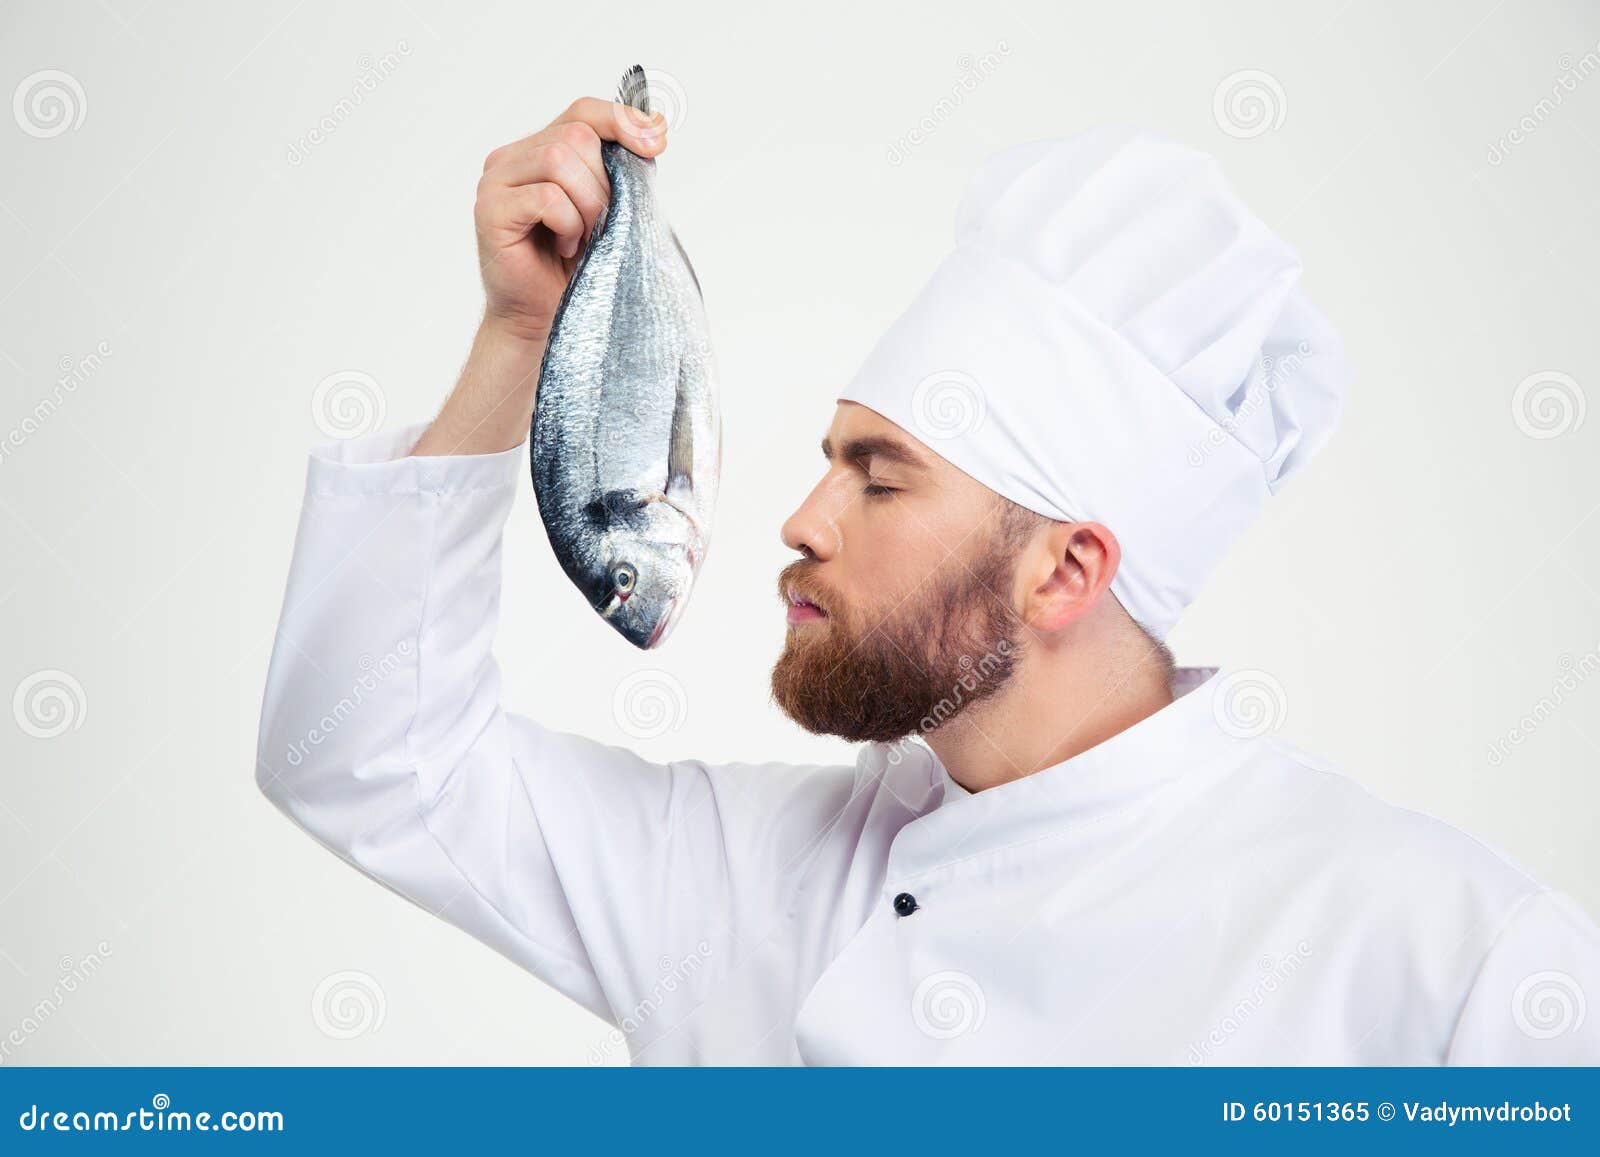 Вкус и запах рыбы